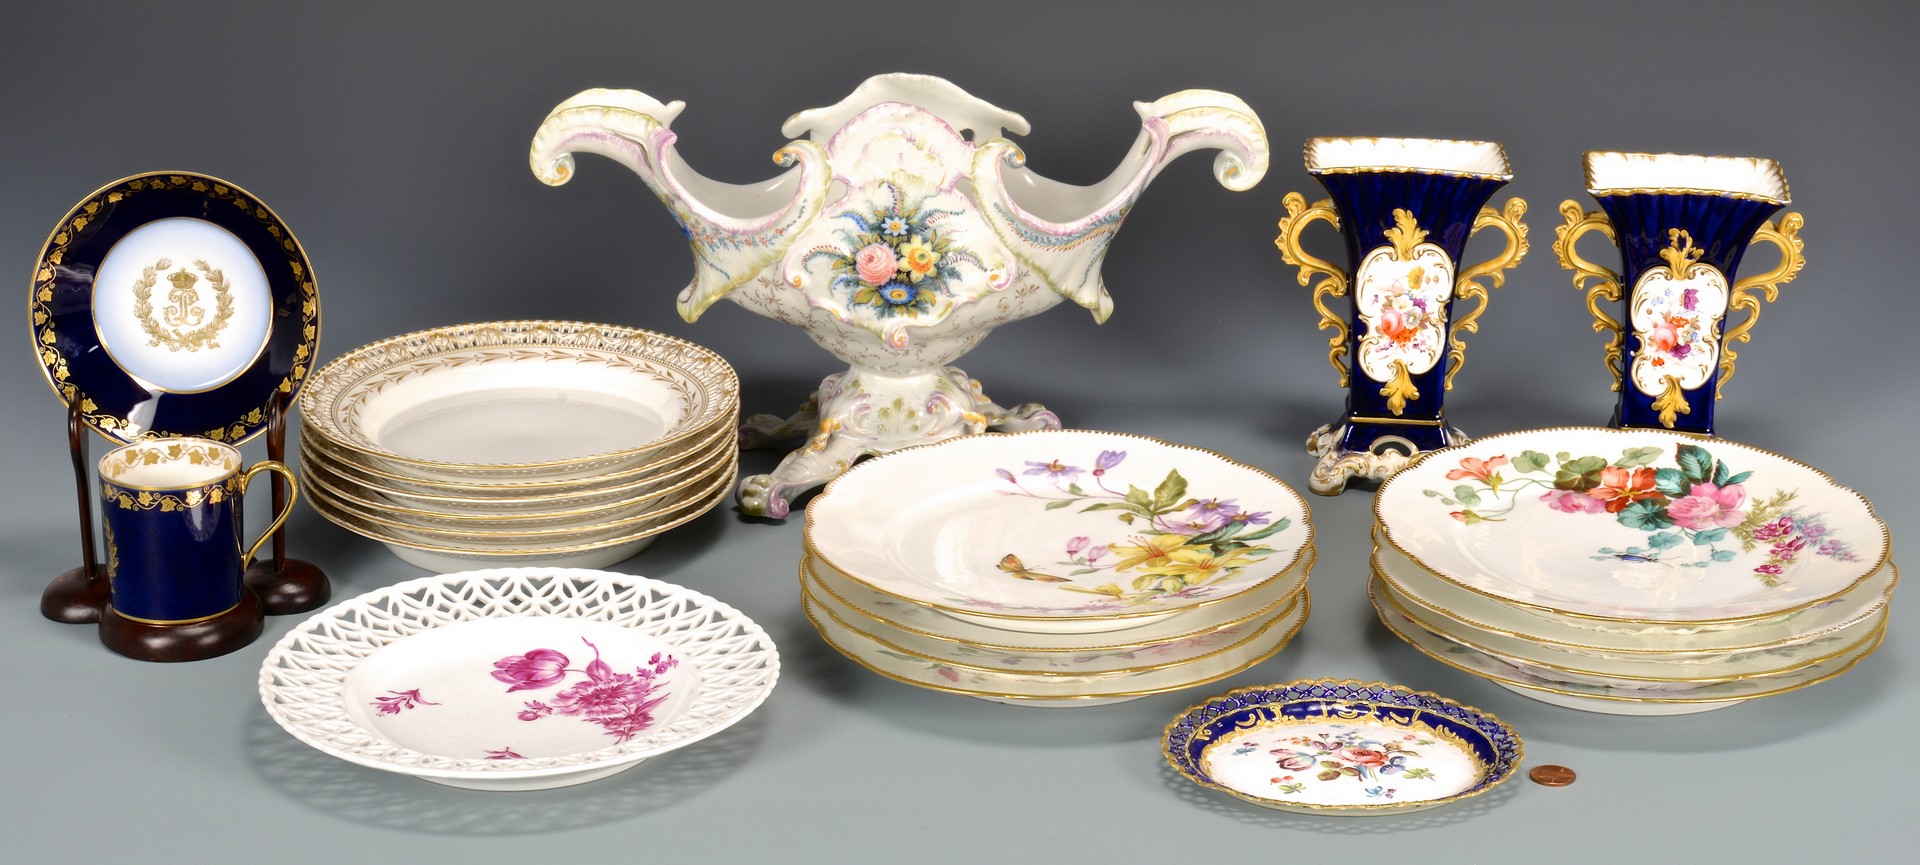 Lot 601: Large Grouping of European Porcelain